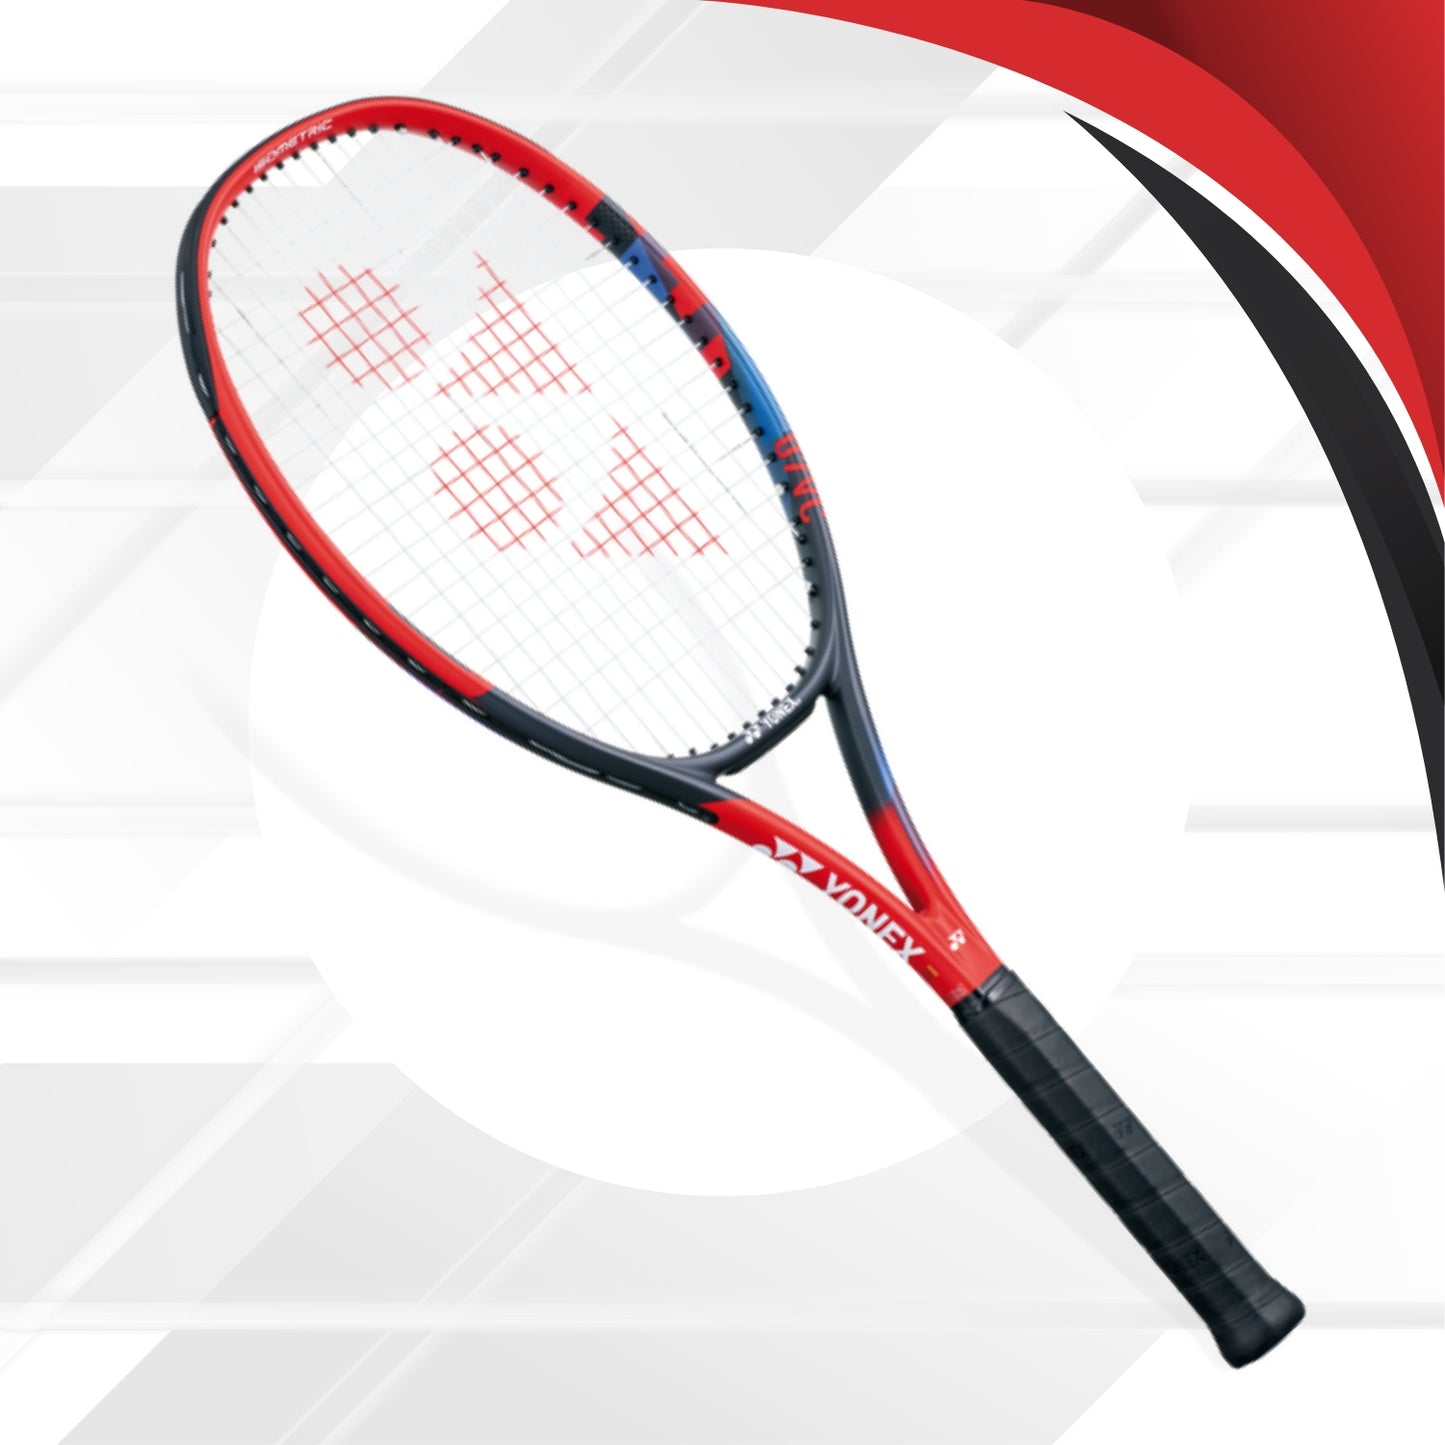 Yonex V Core Ace Tennis Racquet, Scarlet - Best Price online Prokicksports.com